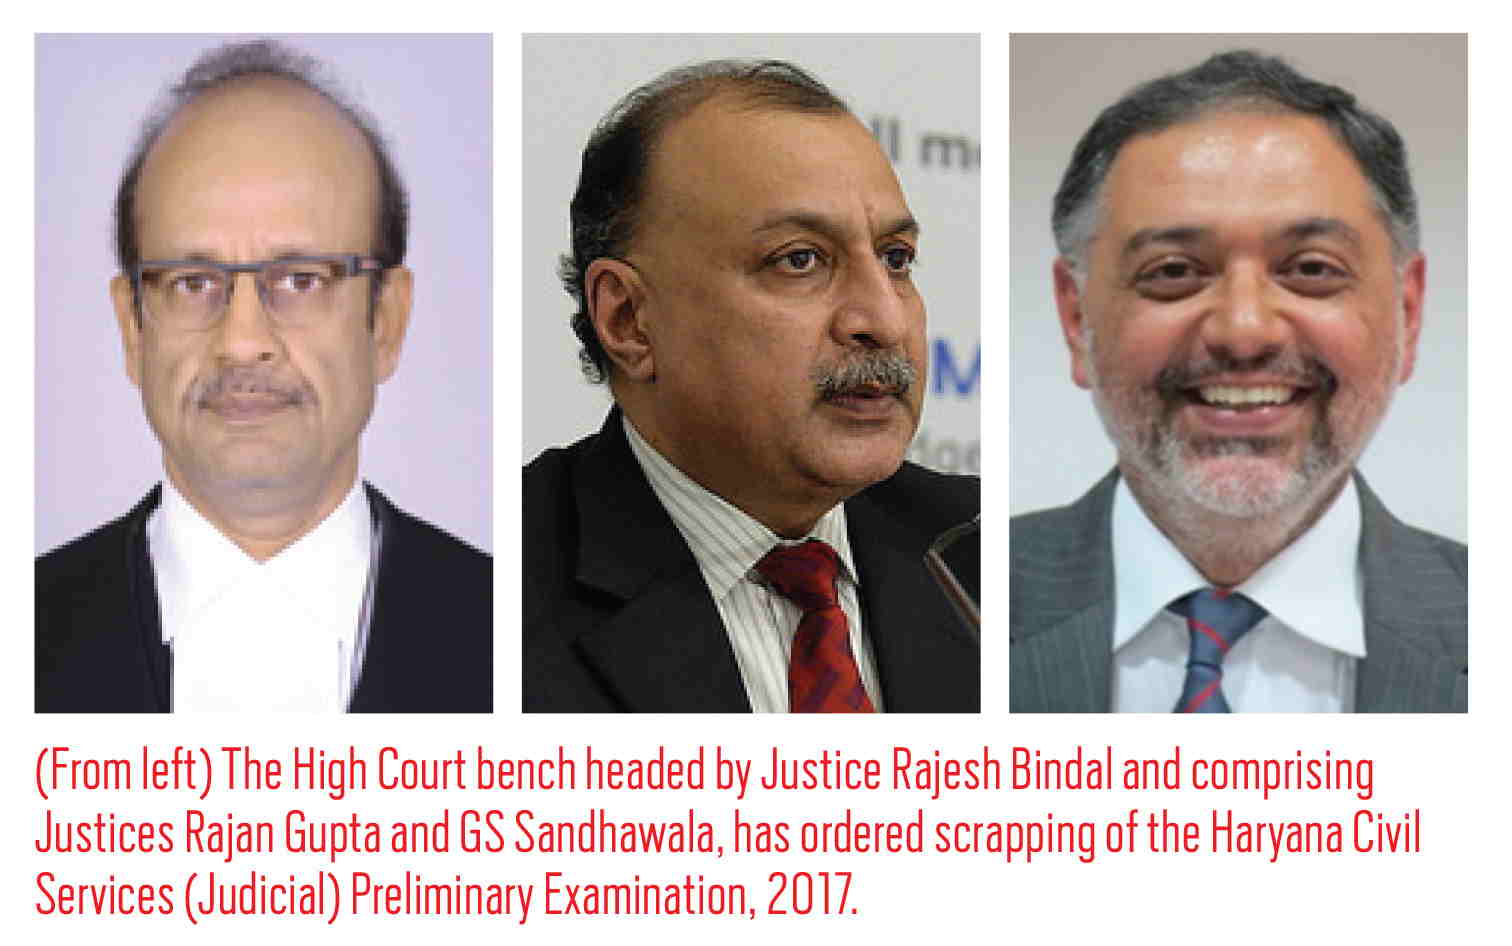 (L to R) Justice rajesh Bindal,Rajan Gupta and GS Sandhawala